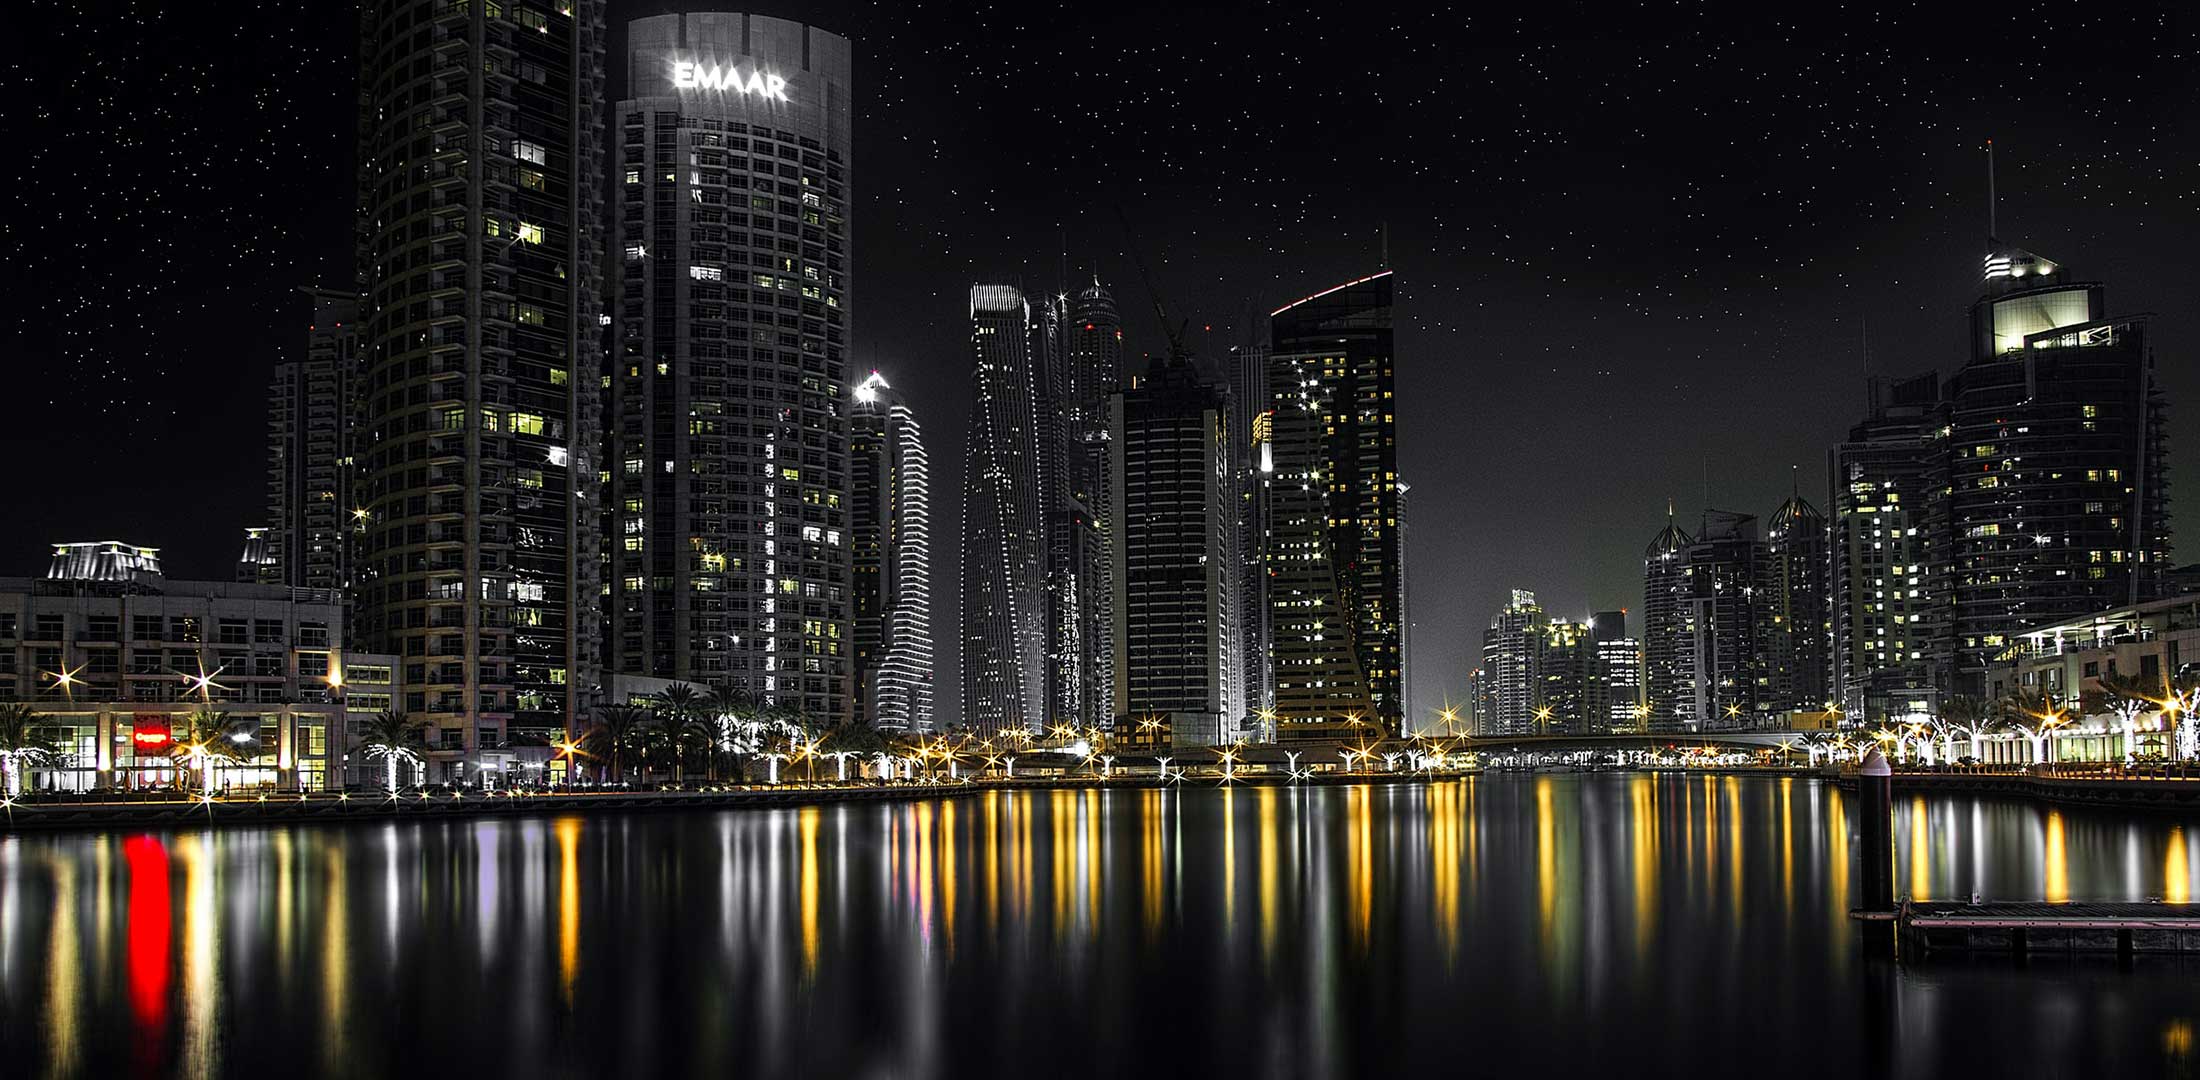 City skyscrapers in the night sky.